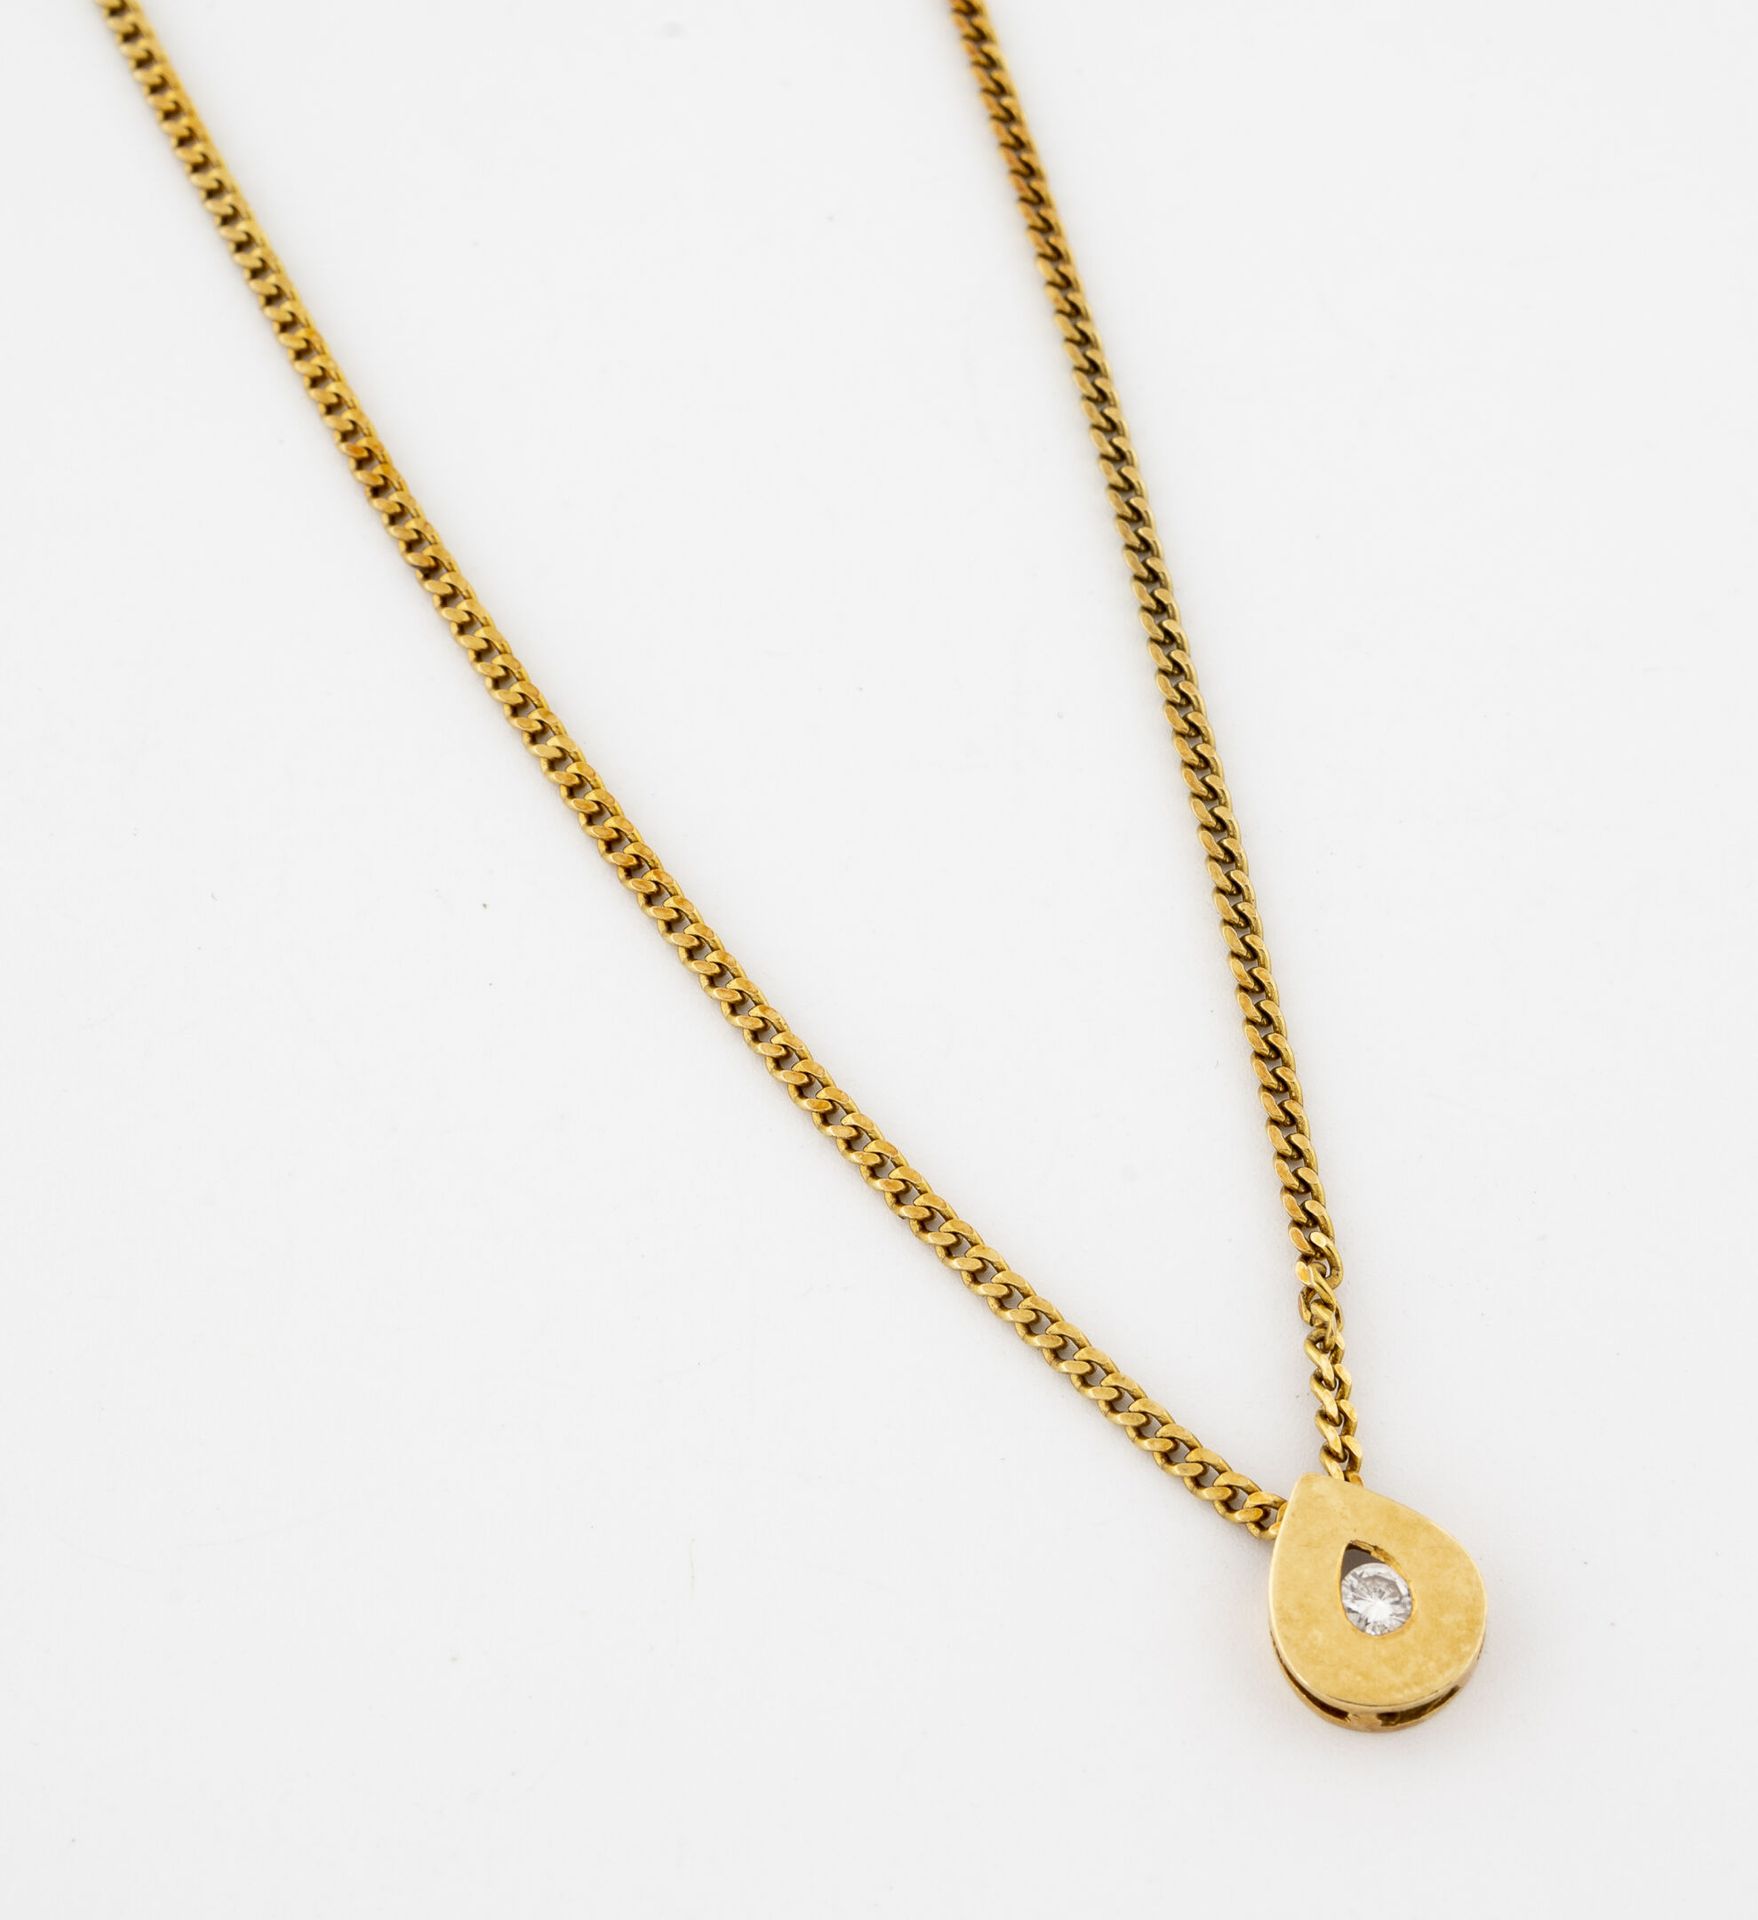 Null 黄金（750）链环项链，小坠子上镶嵌着一颗明亮式切割钻石。

龙虾扣。

毛重：8.1克。- 长度：47厘米。